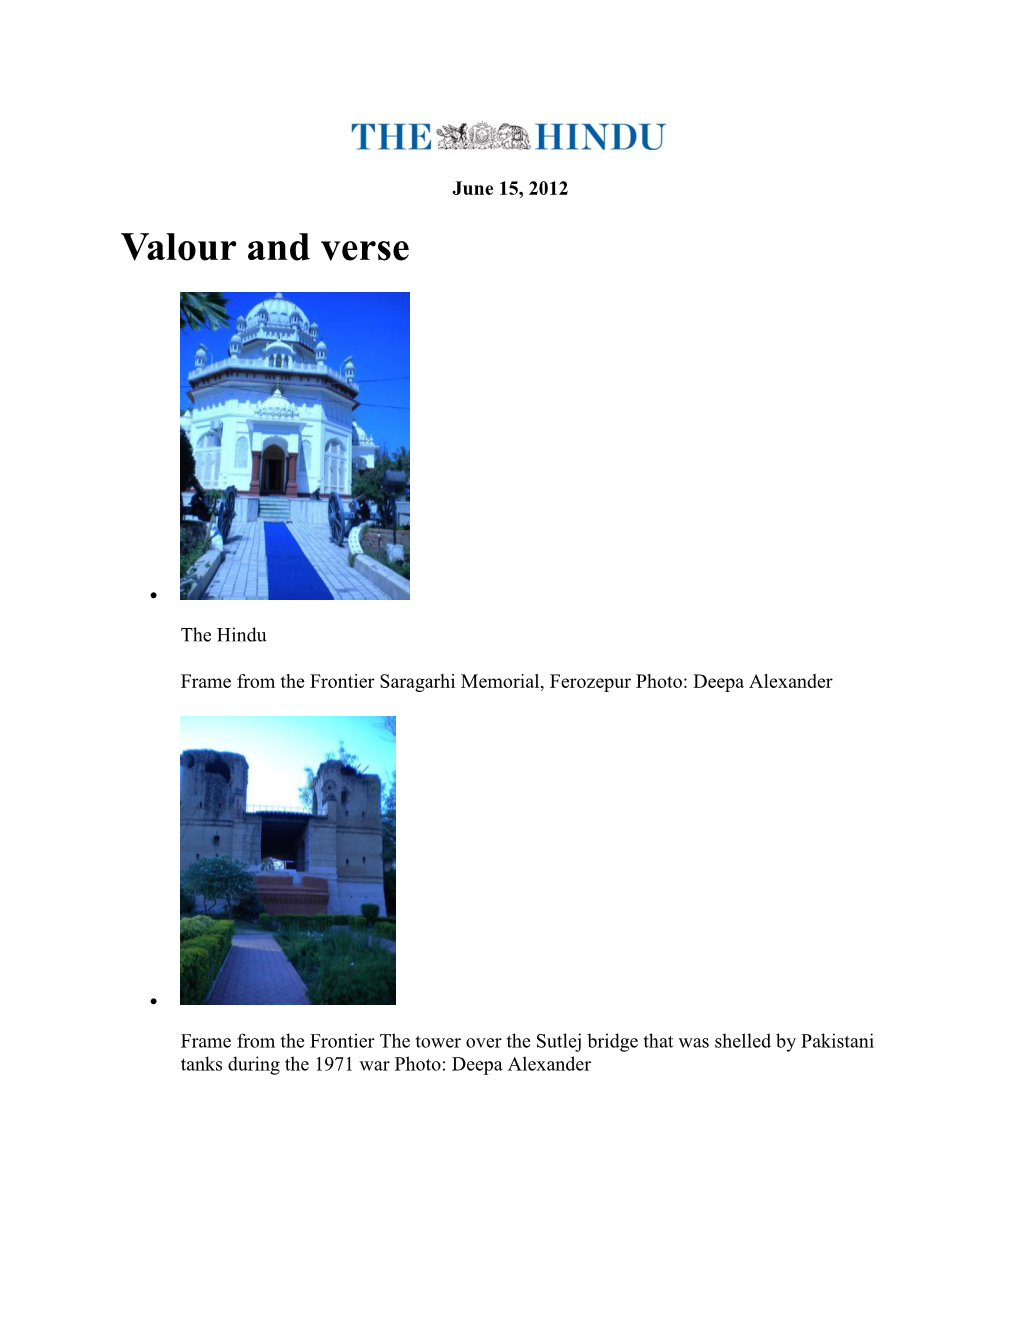 Valour and Verse